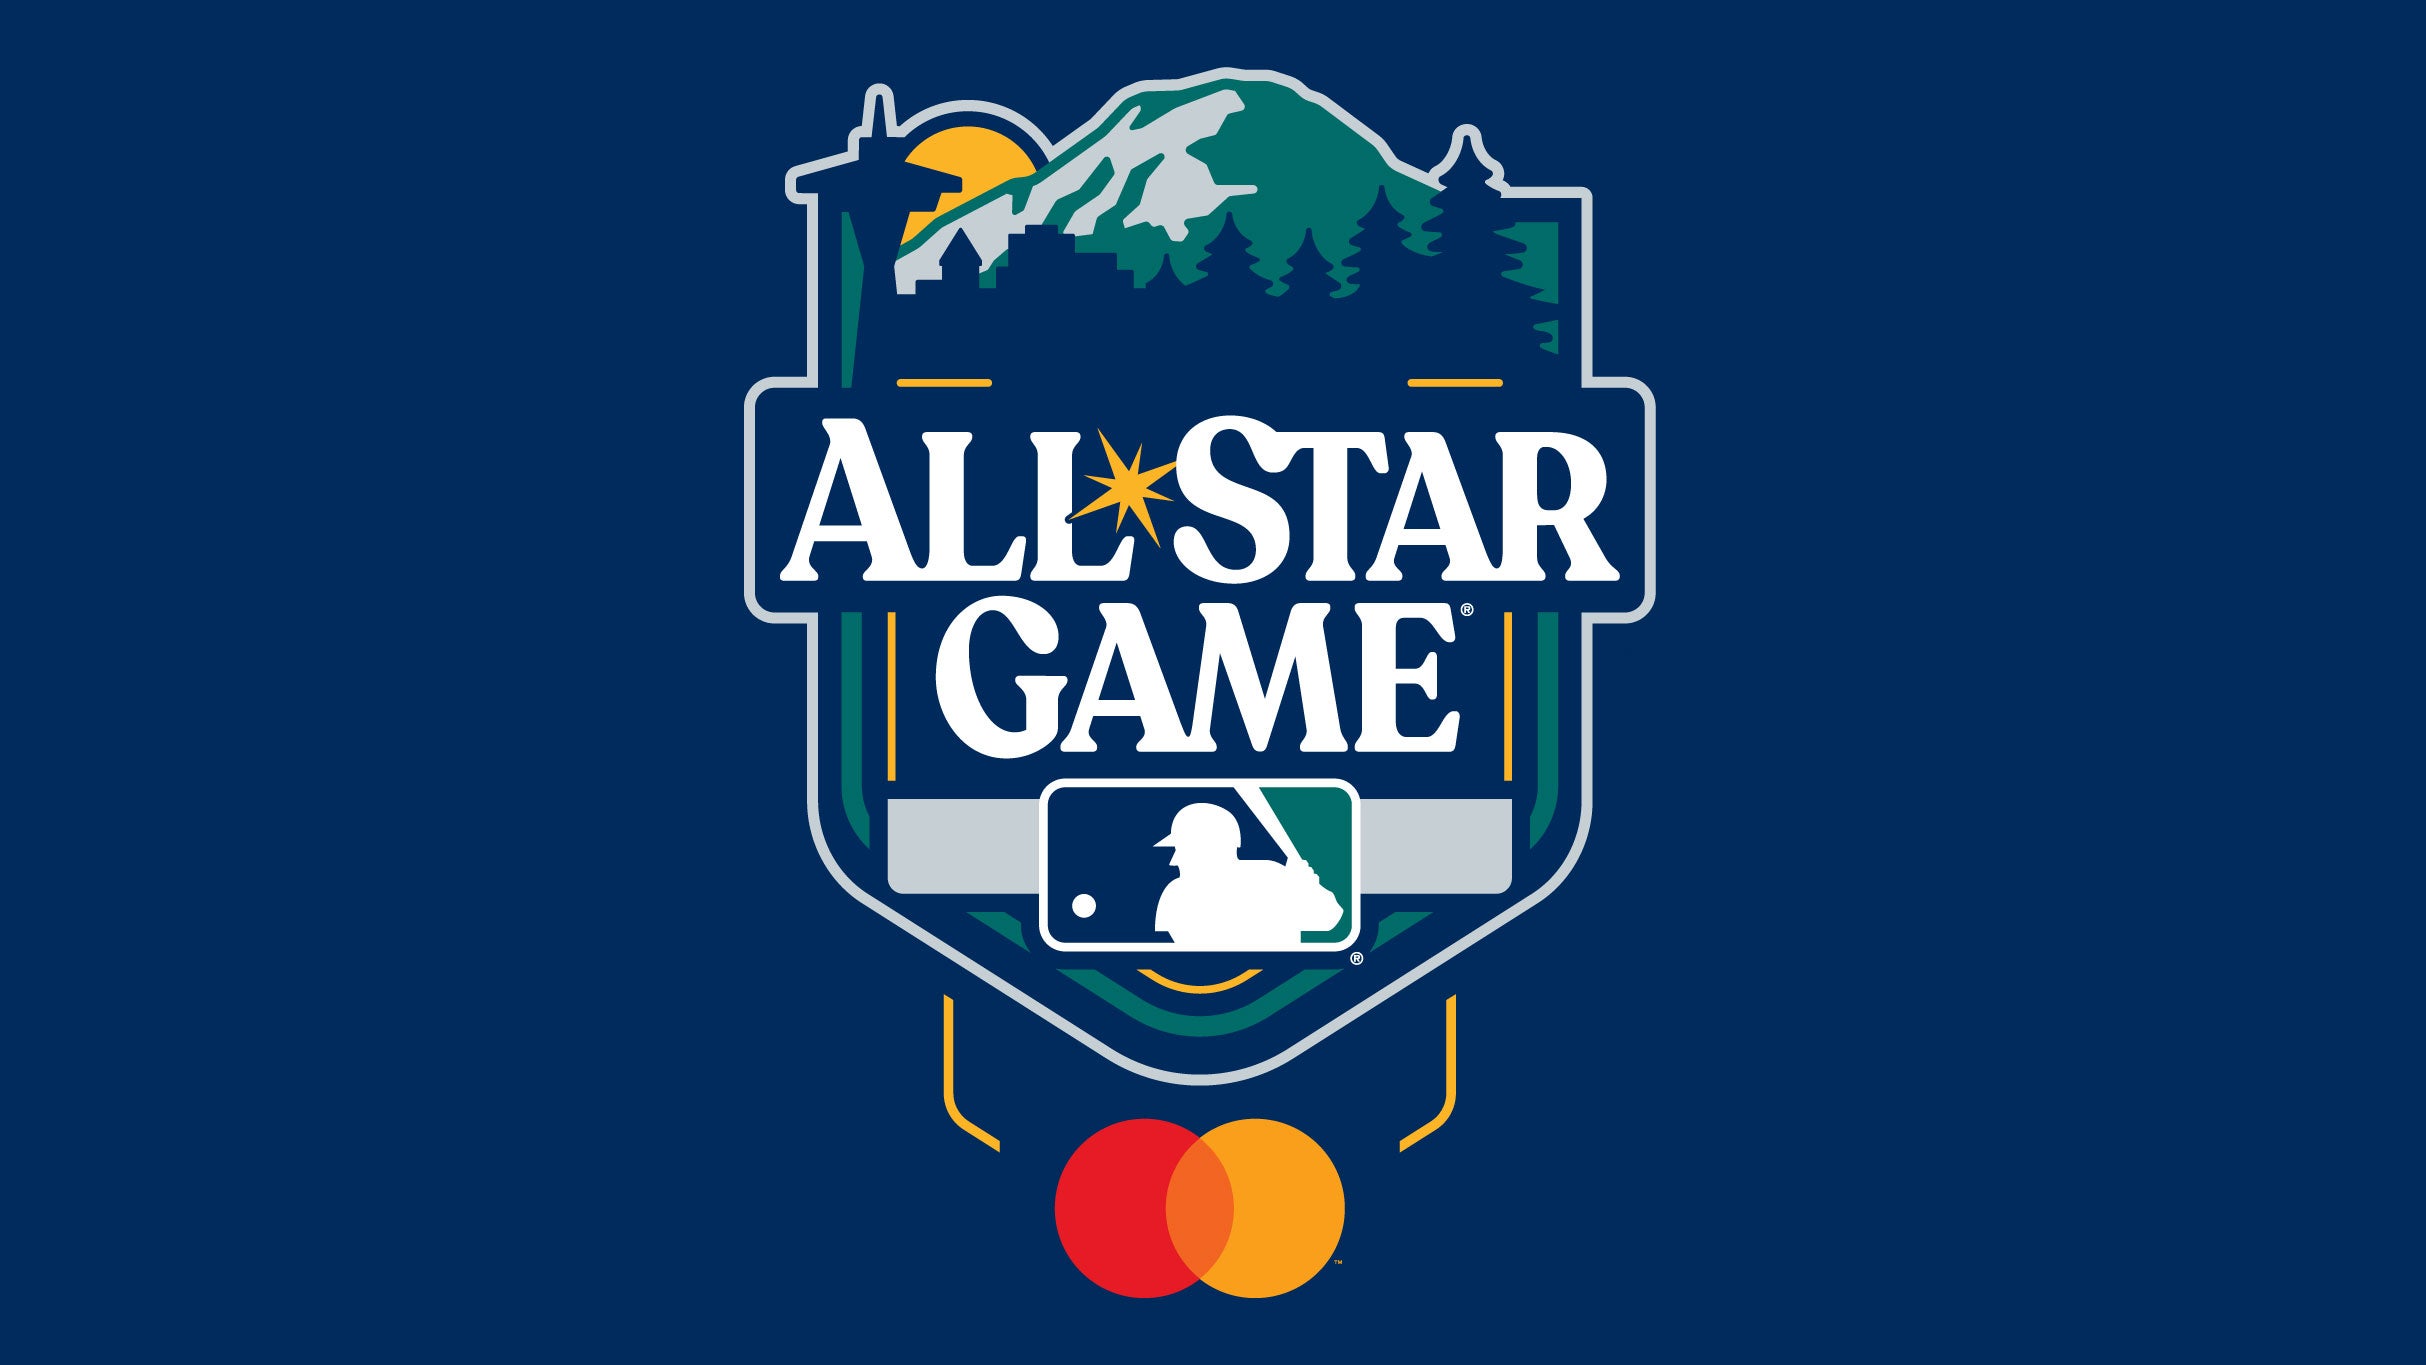 MLB All Star Game at Globe Life Field